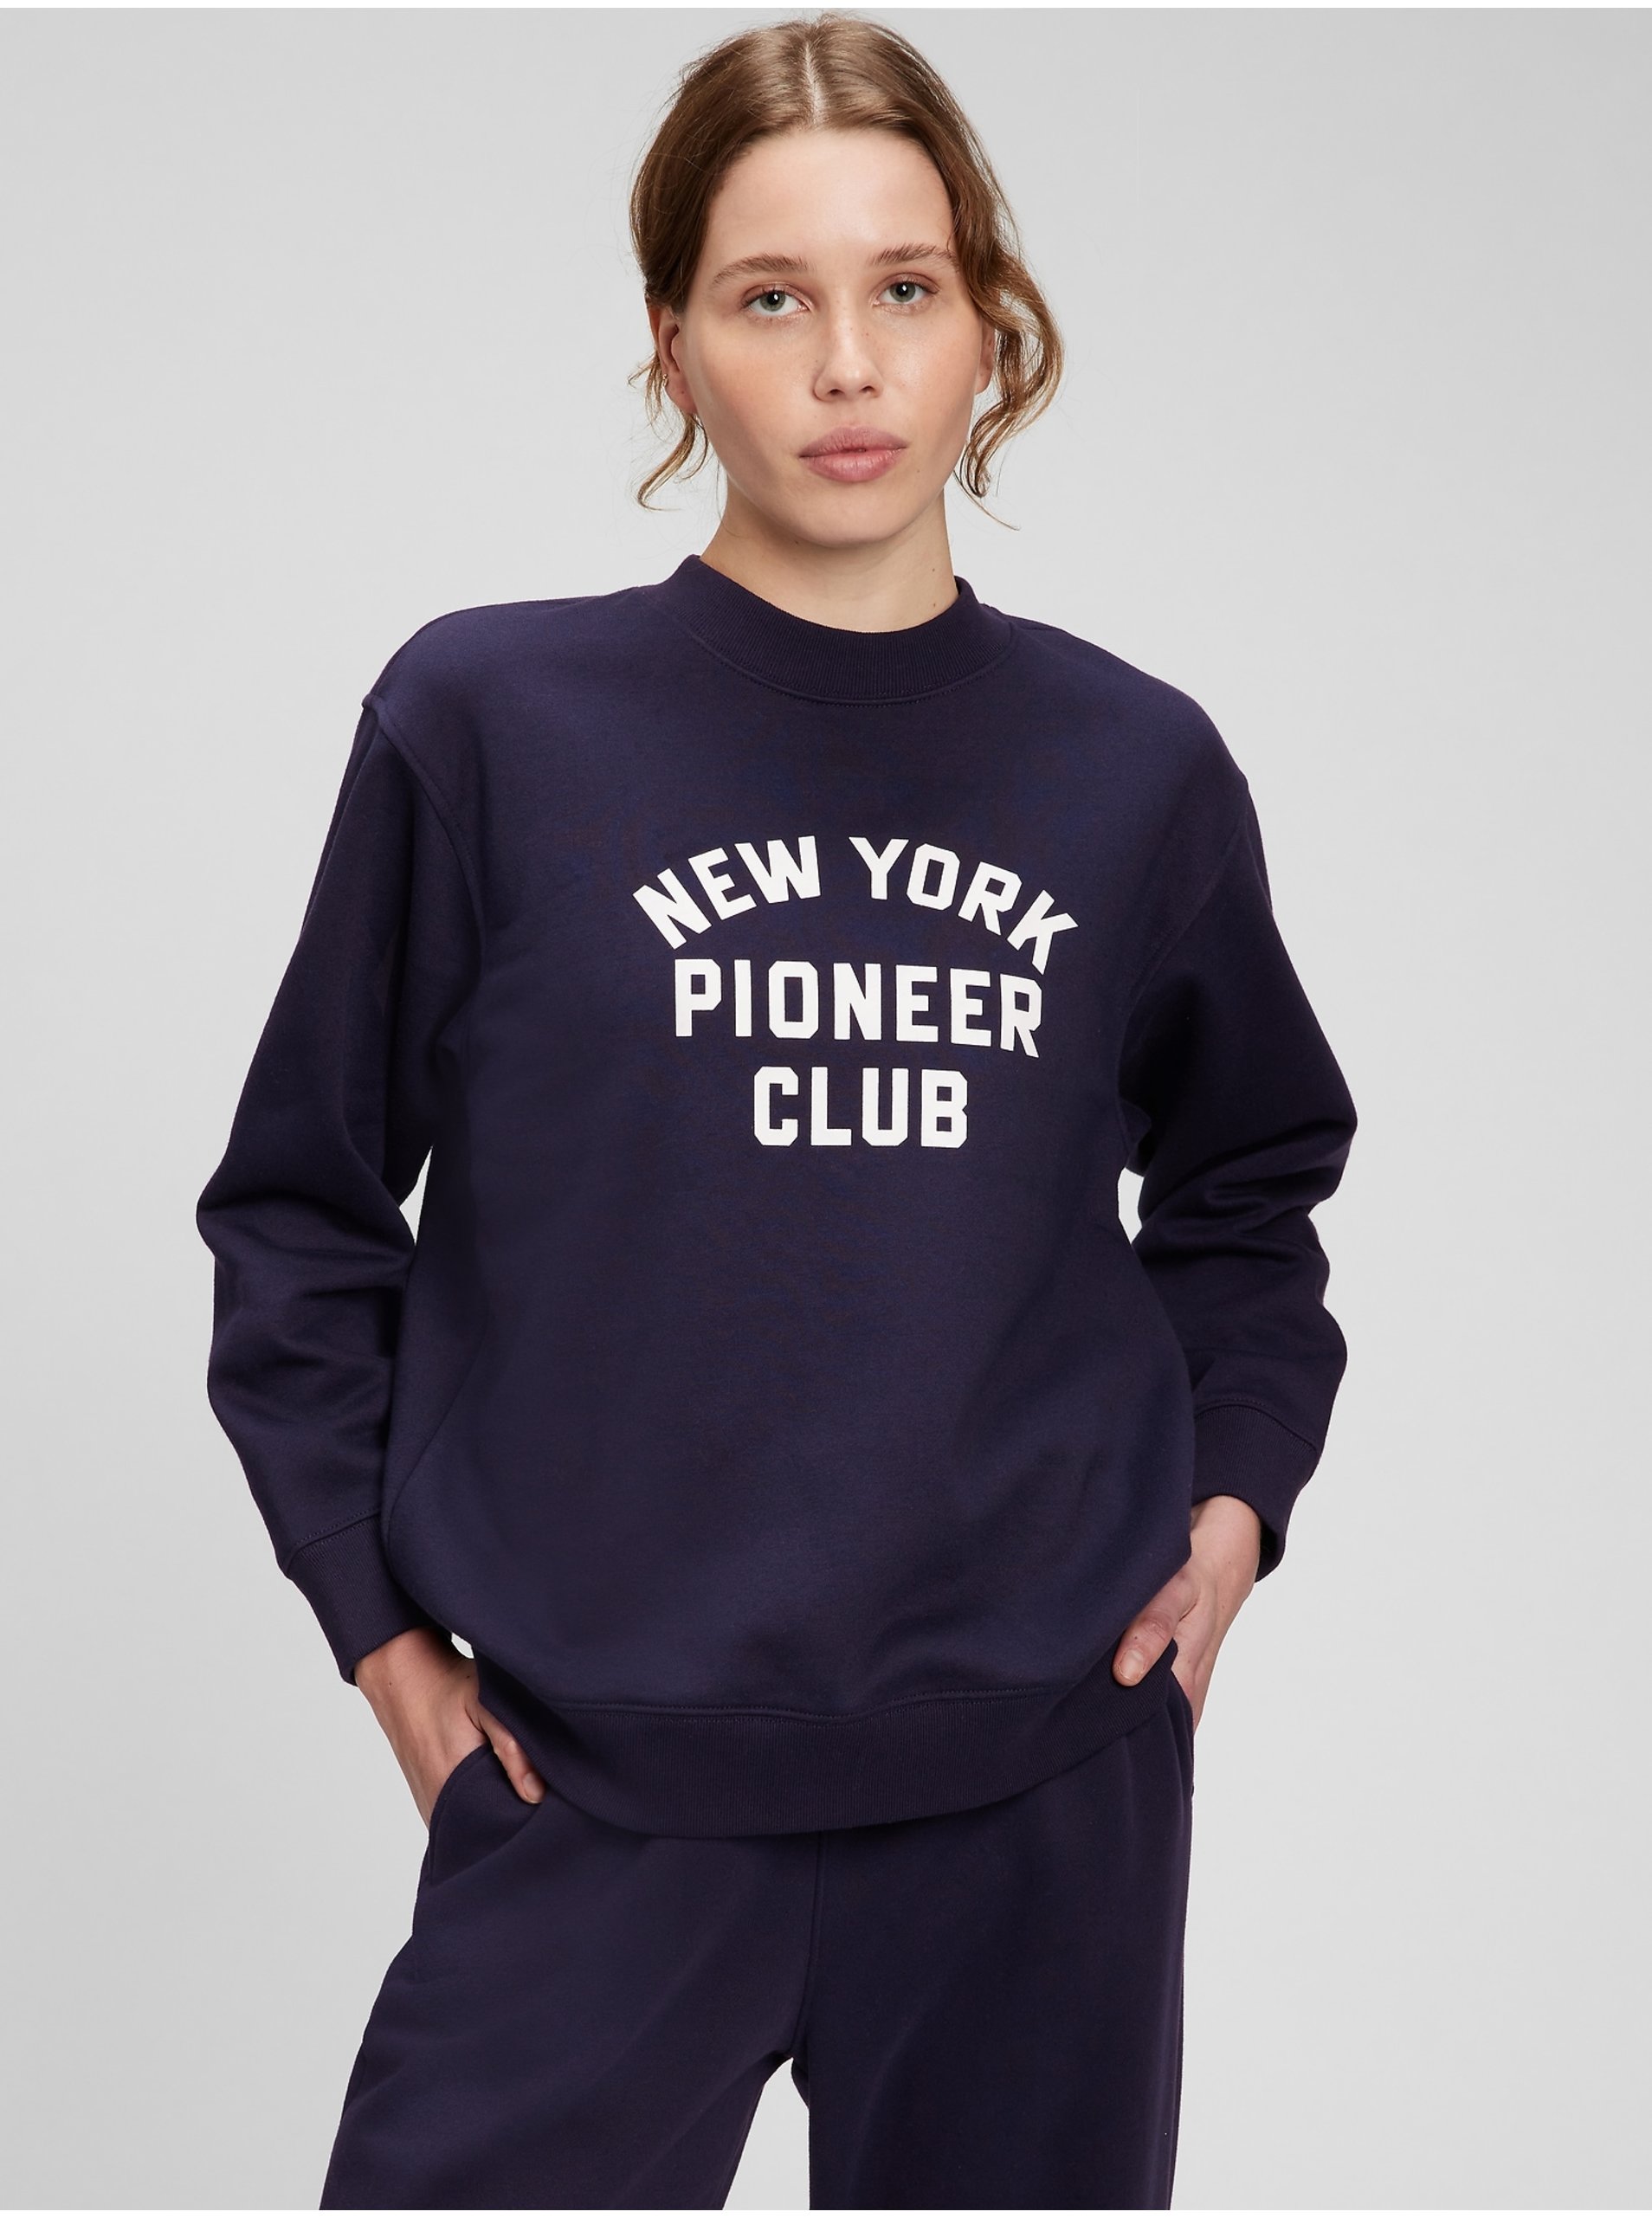 E-shop Tmavě modrá dámská mikina GAP New York pioneer club